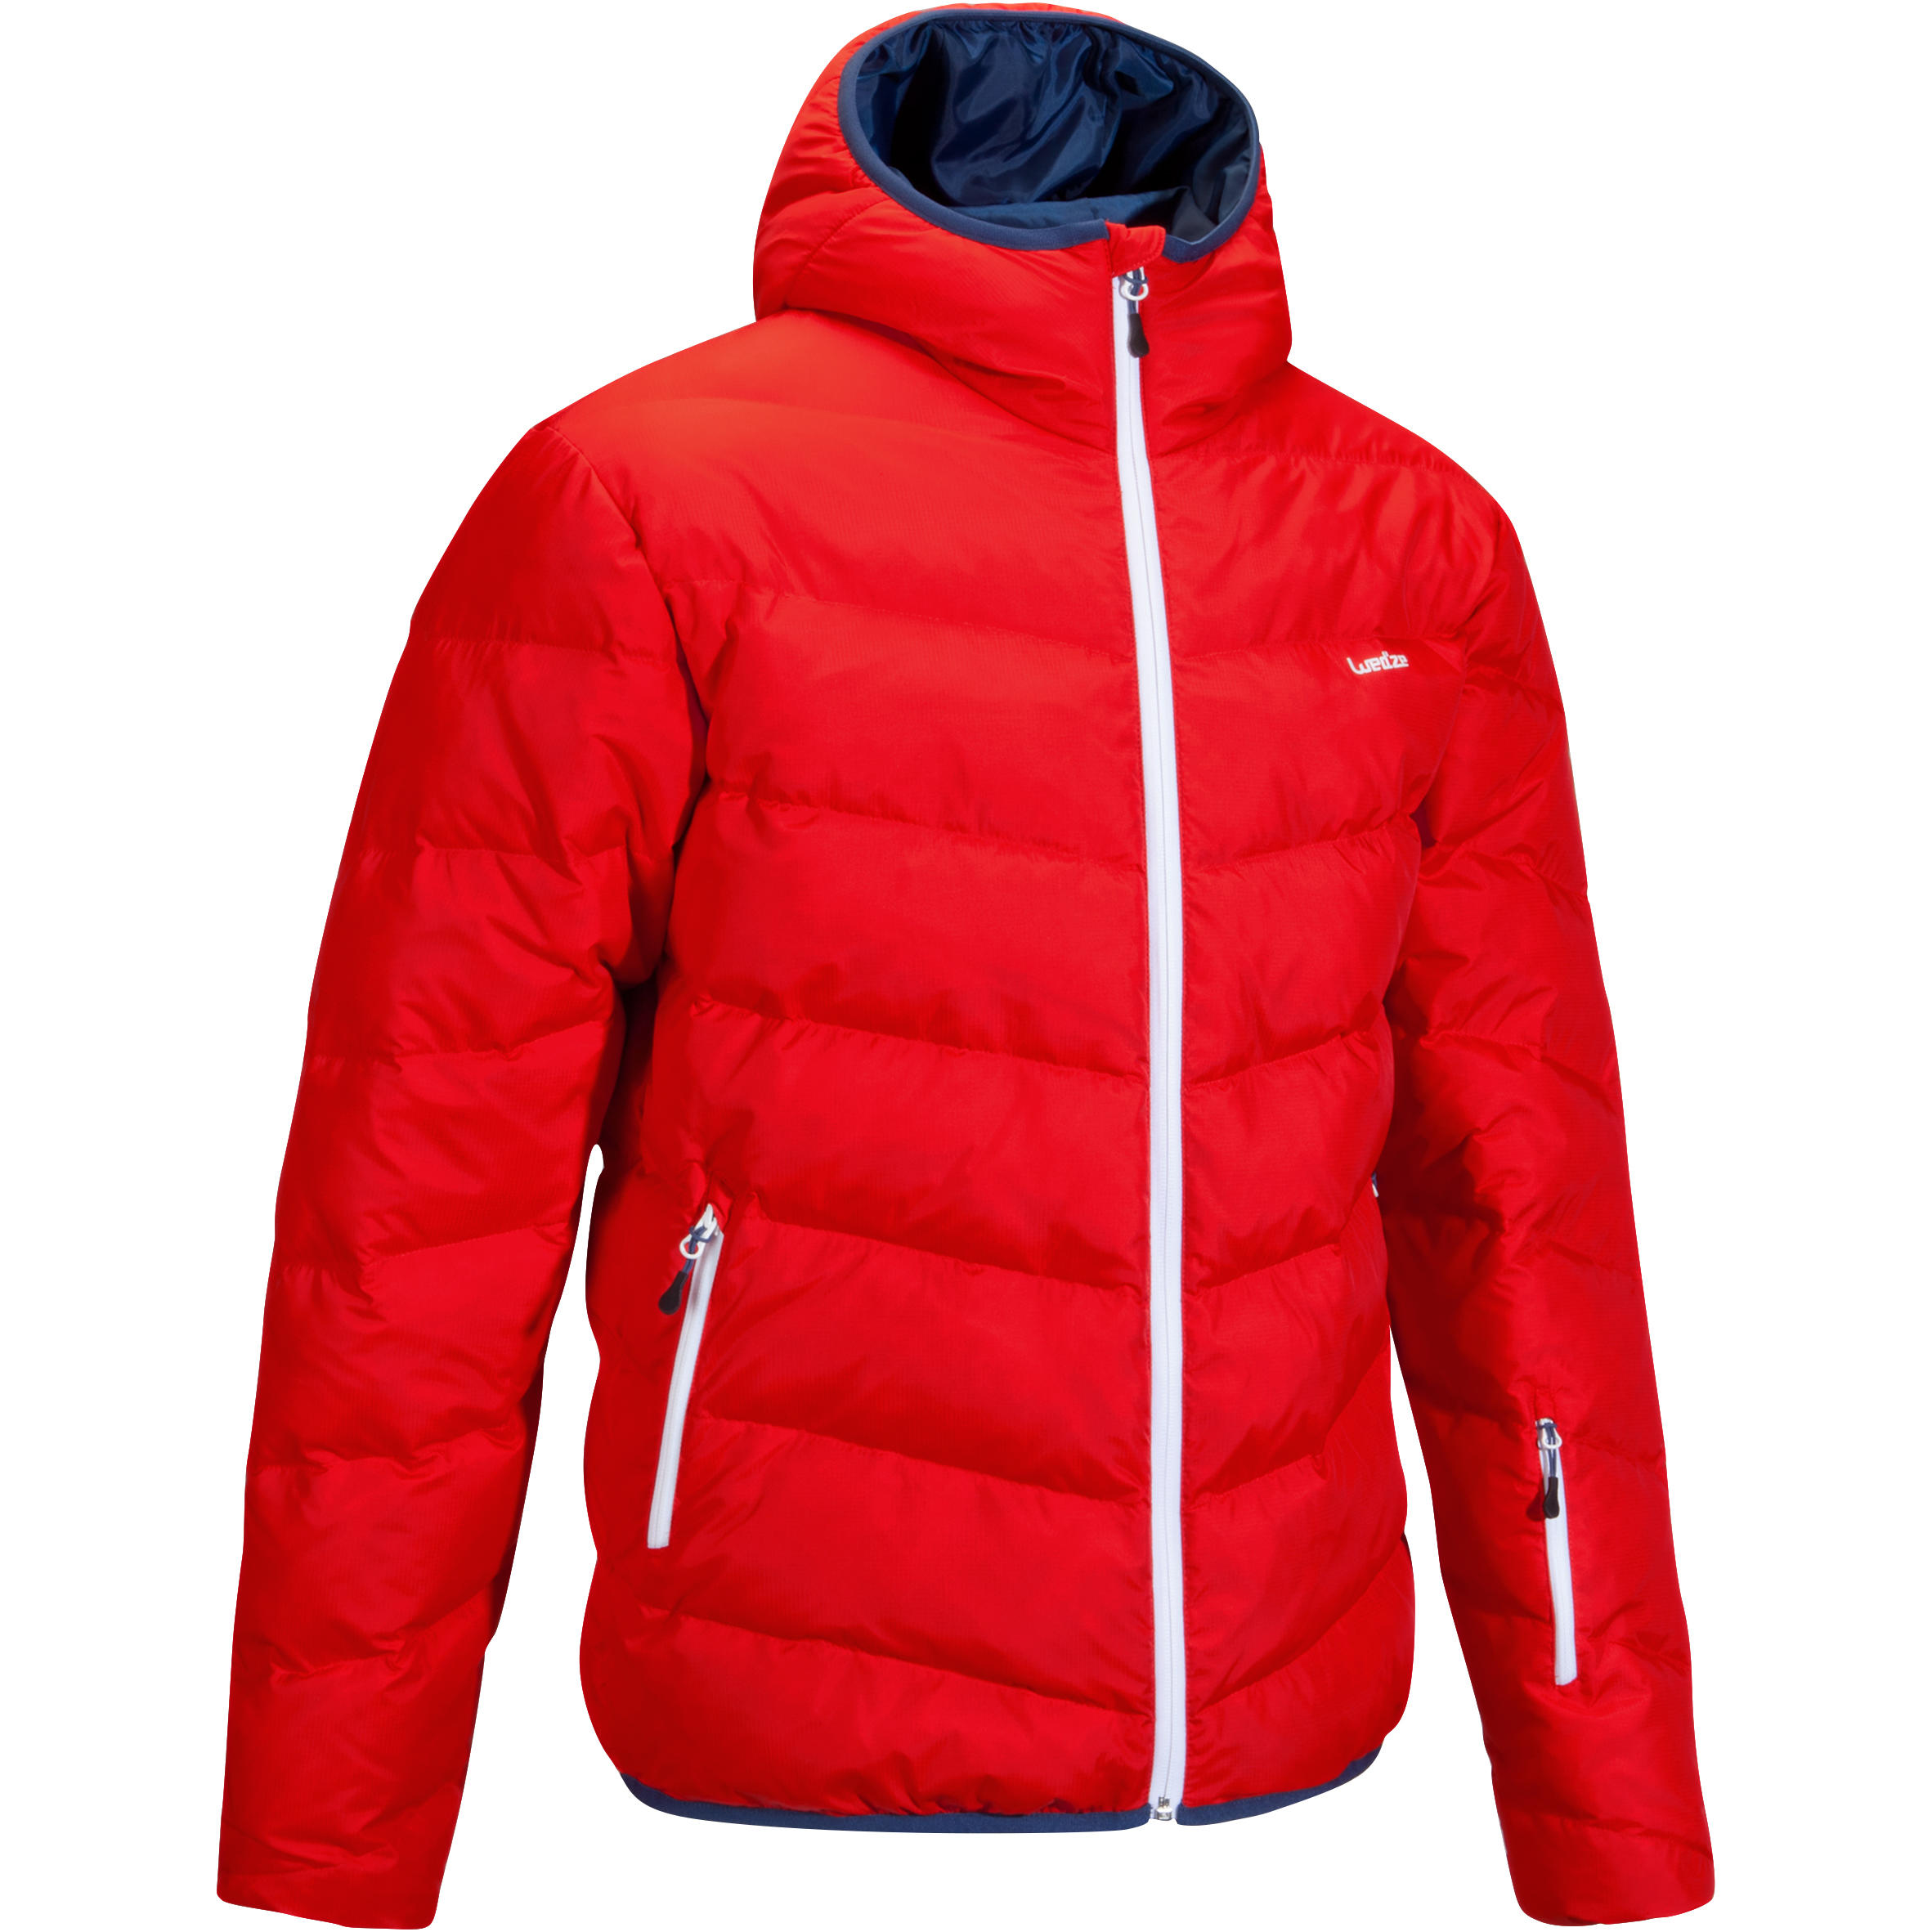 WEDZE Slide 300 Warm Men's Ski Jacket - Red